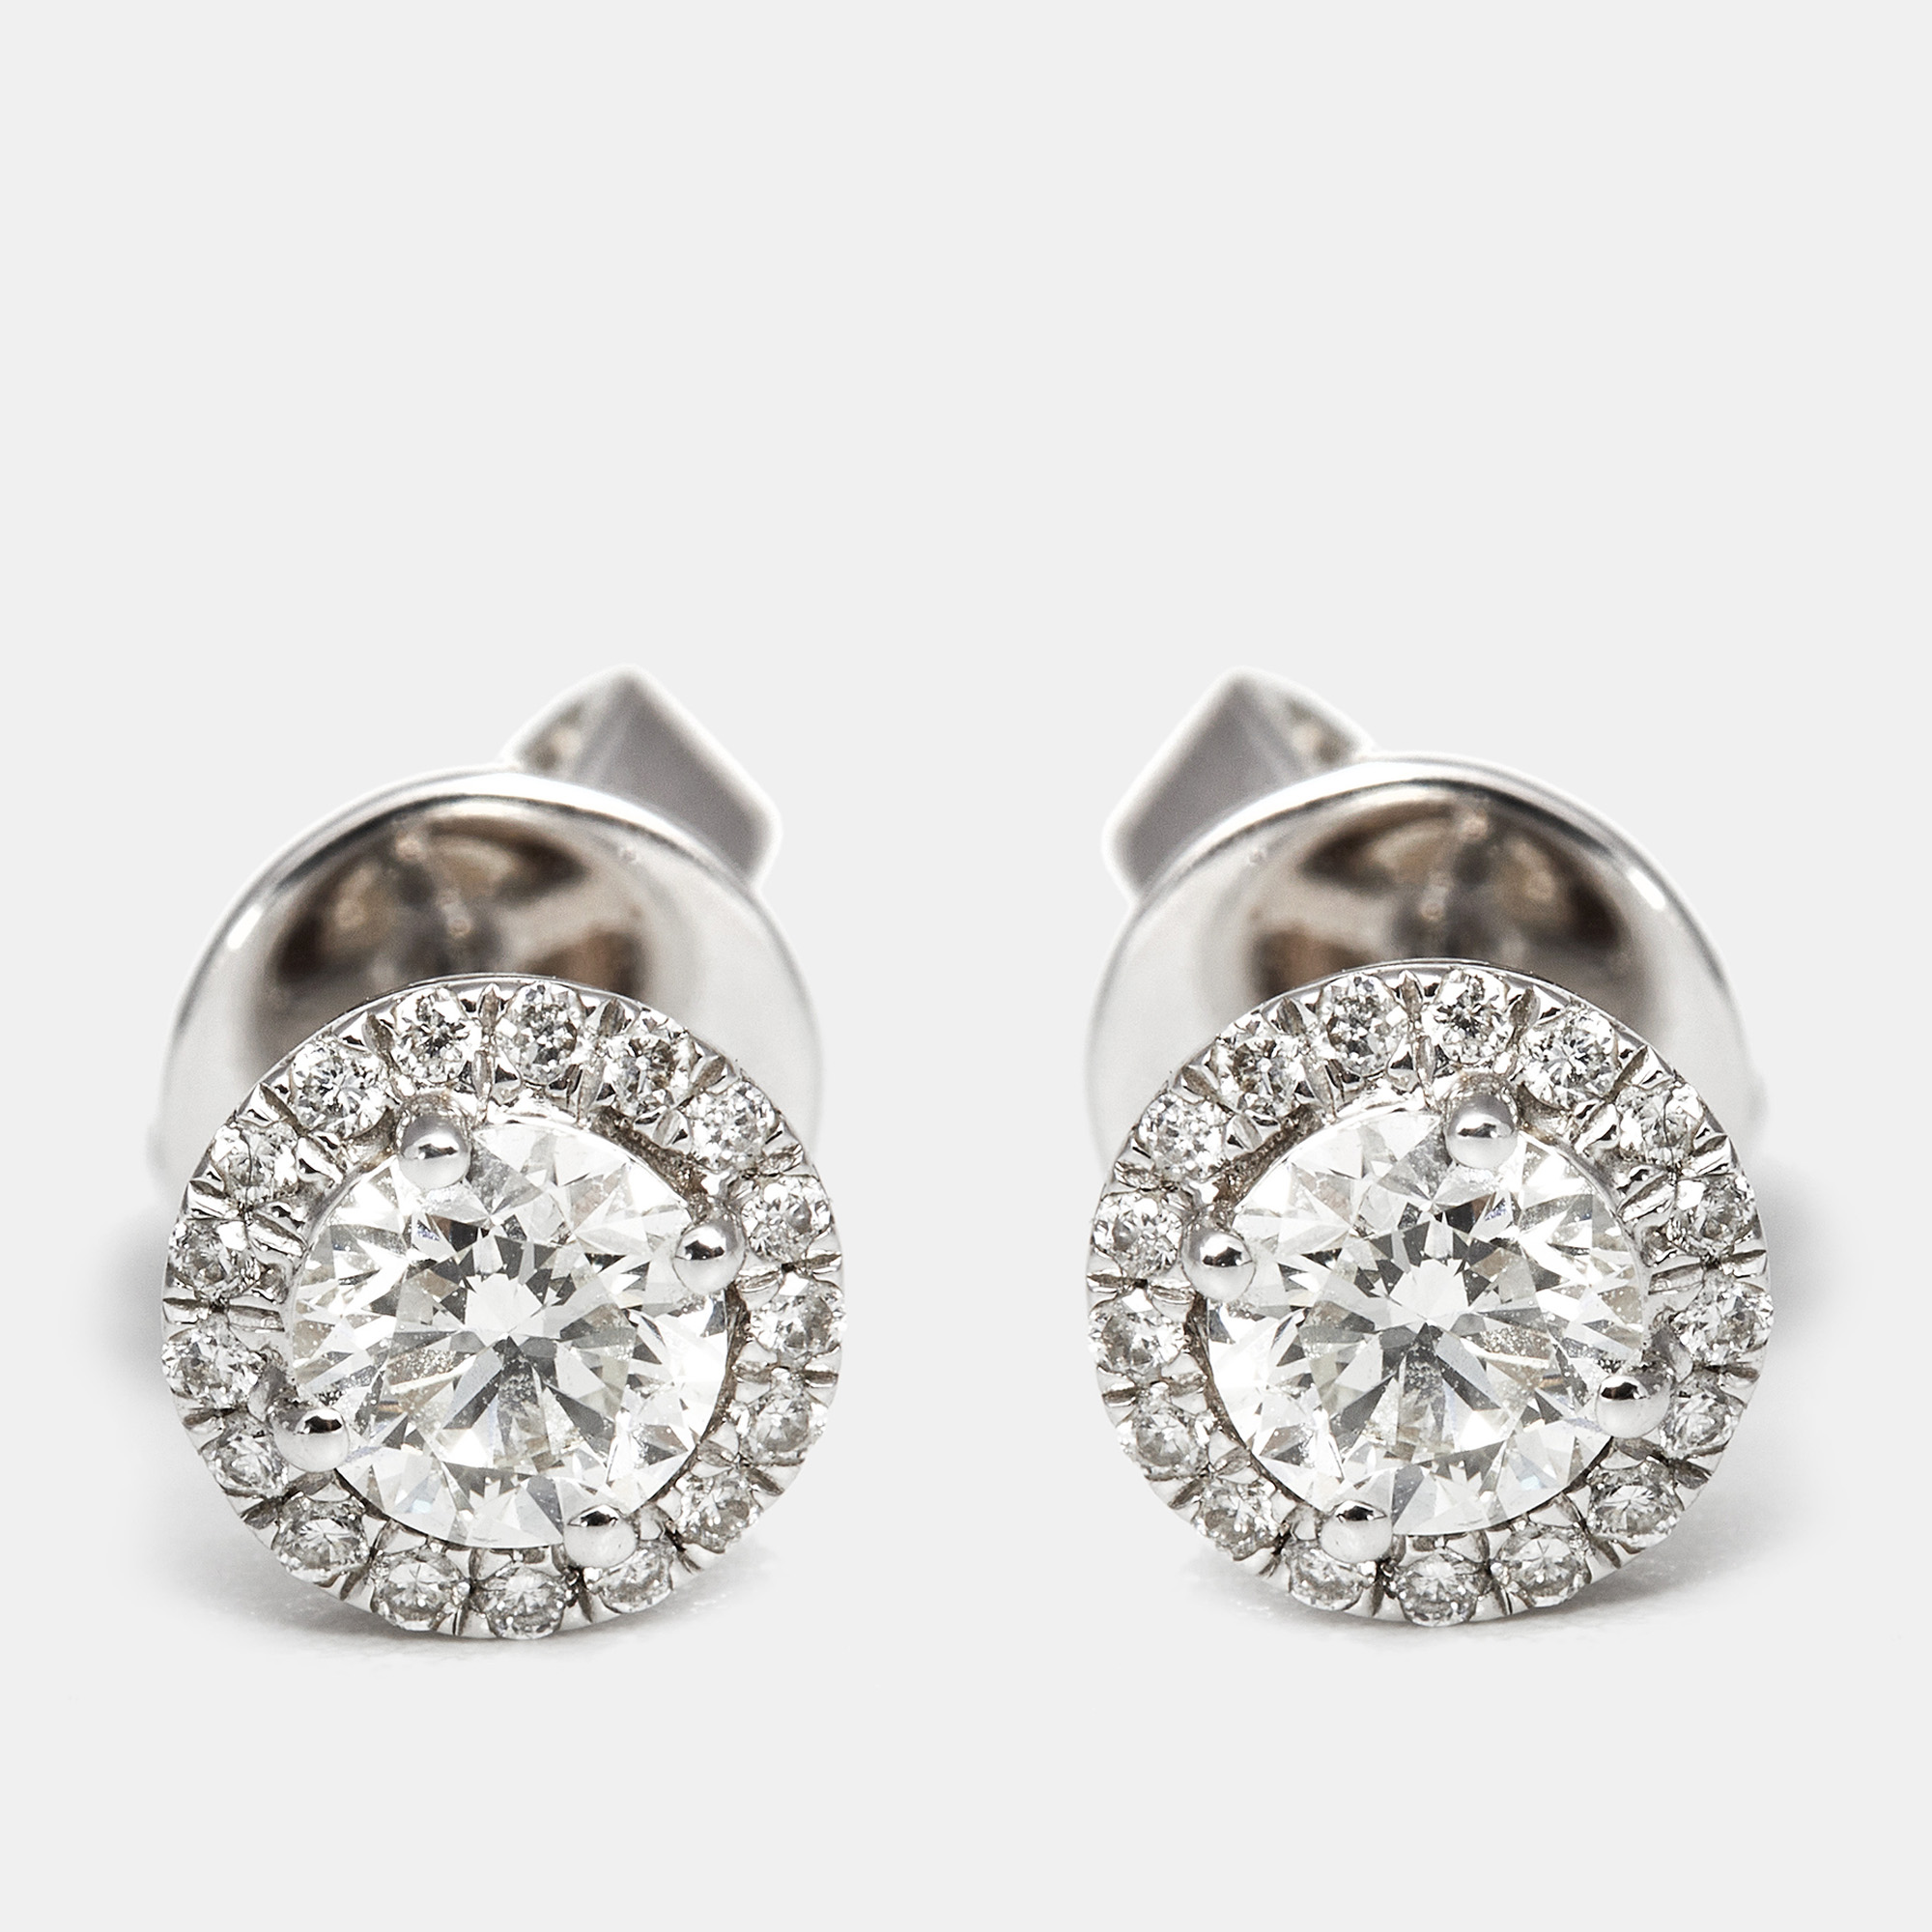 The diamond edit daily wear diamond 0.52 cts 18k white gold stud earrings